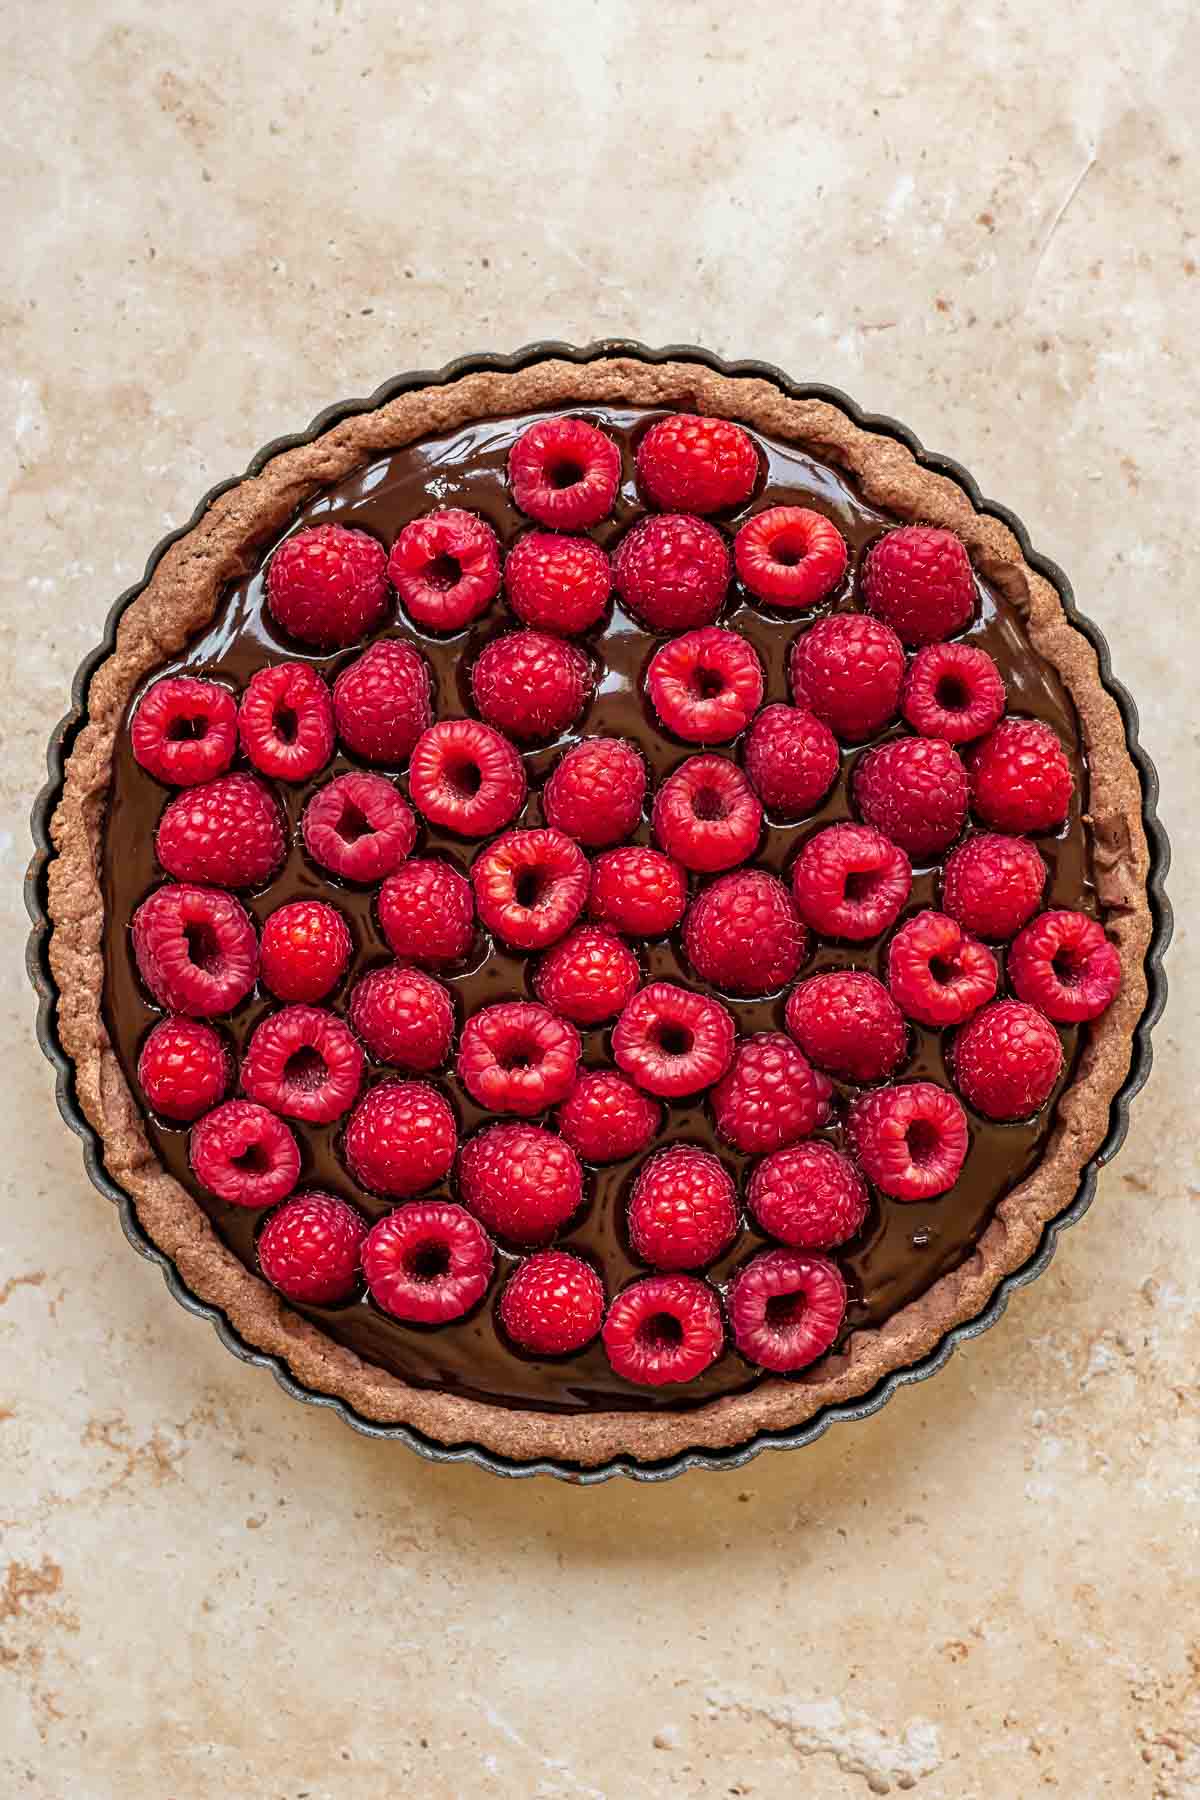 Raspberries pressed into chocolate ganache in a tart.